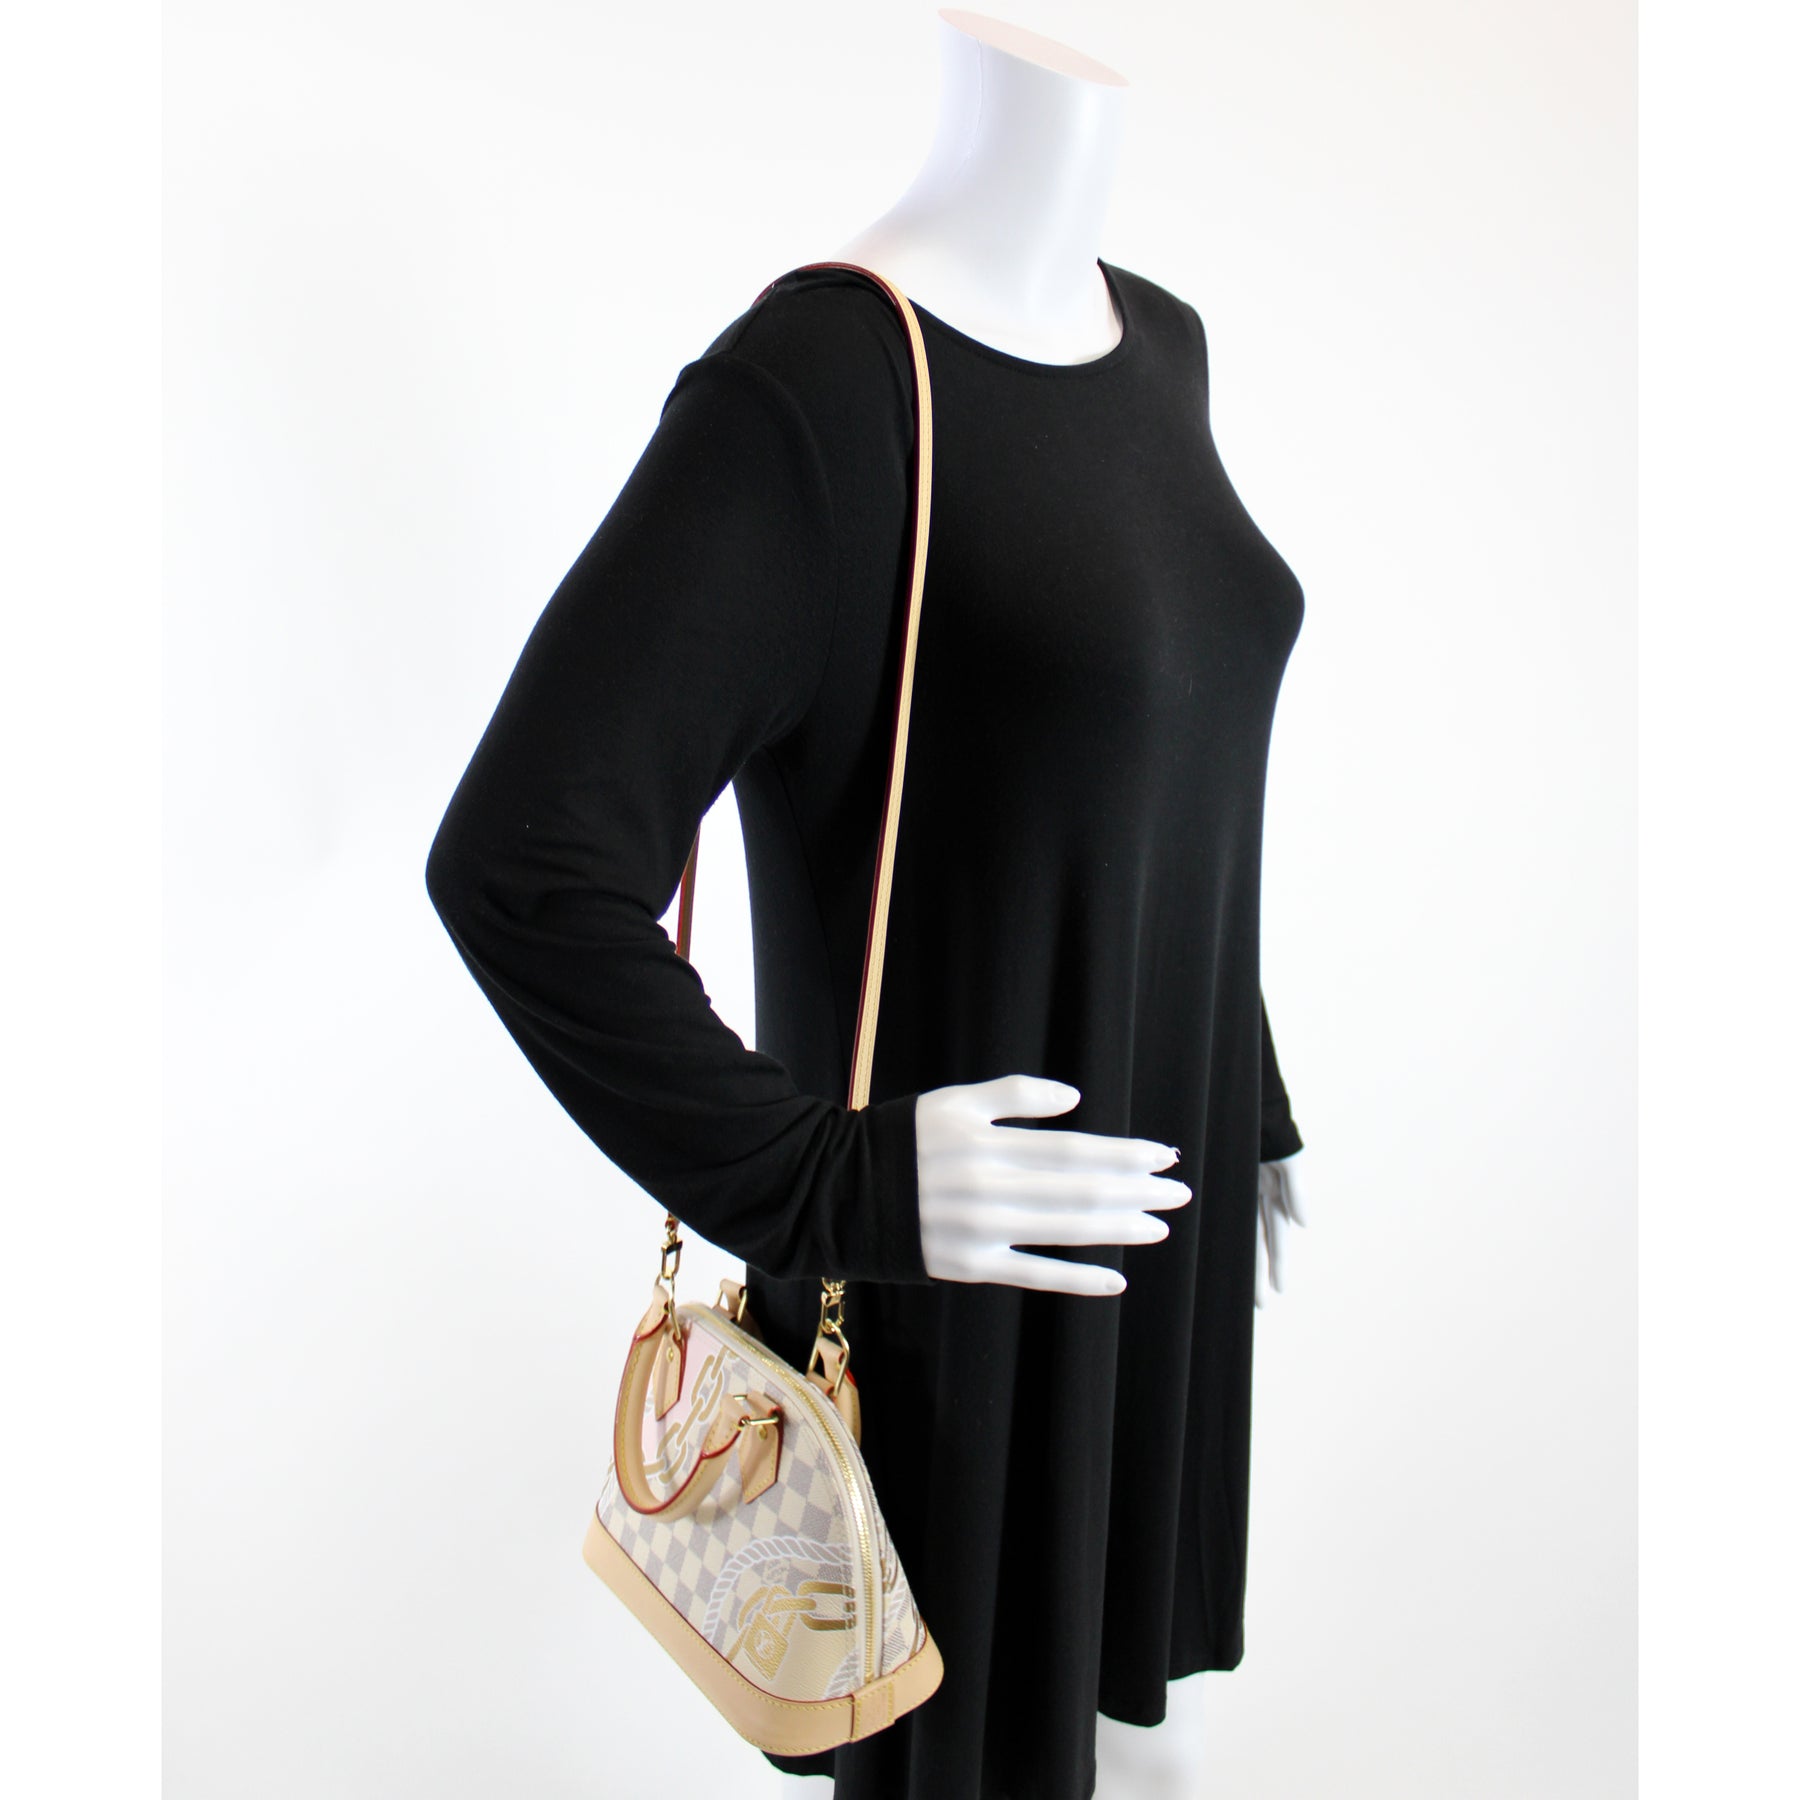 New Spring Collection - Nautical Alma BB - Leather Handbag for Women